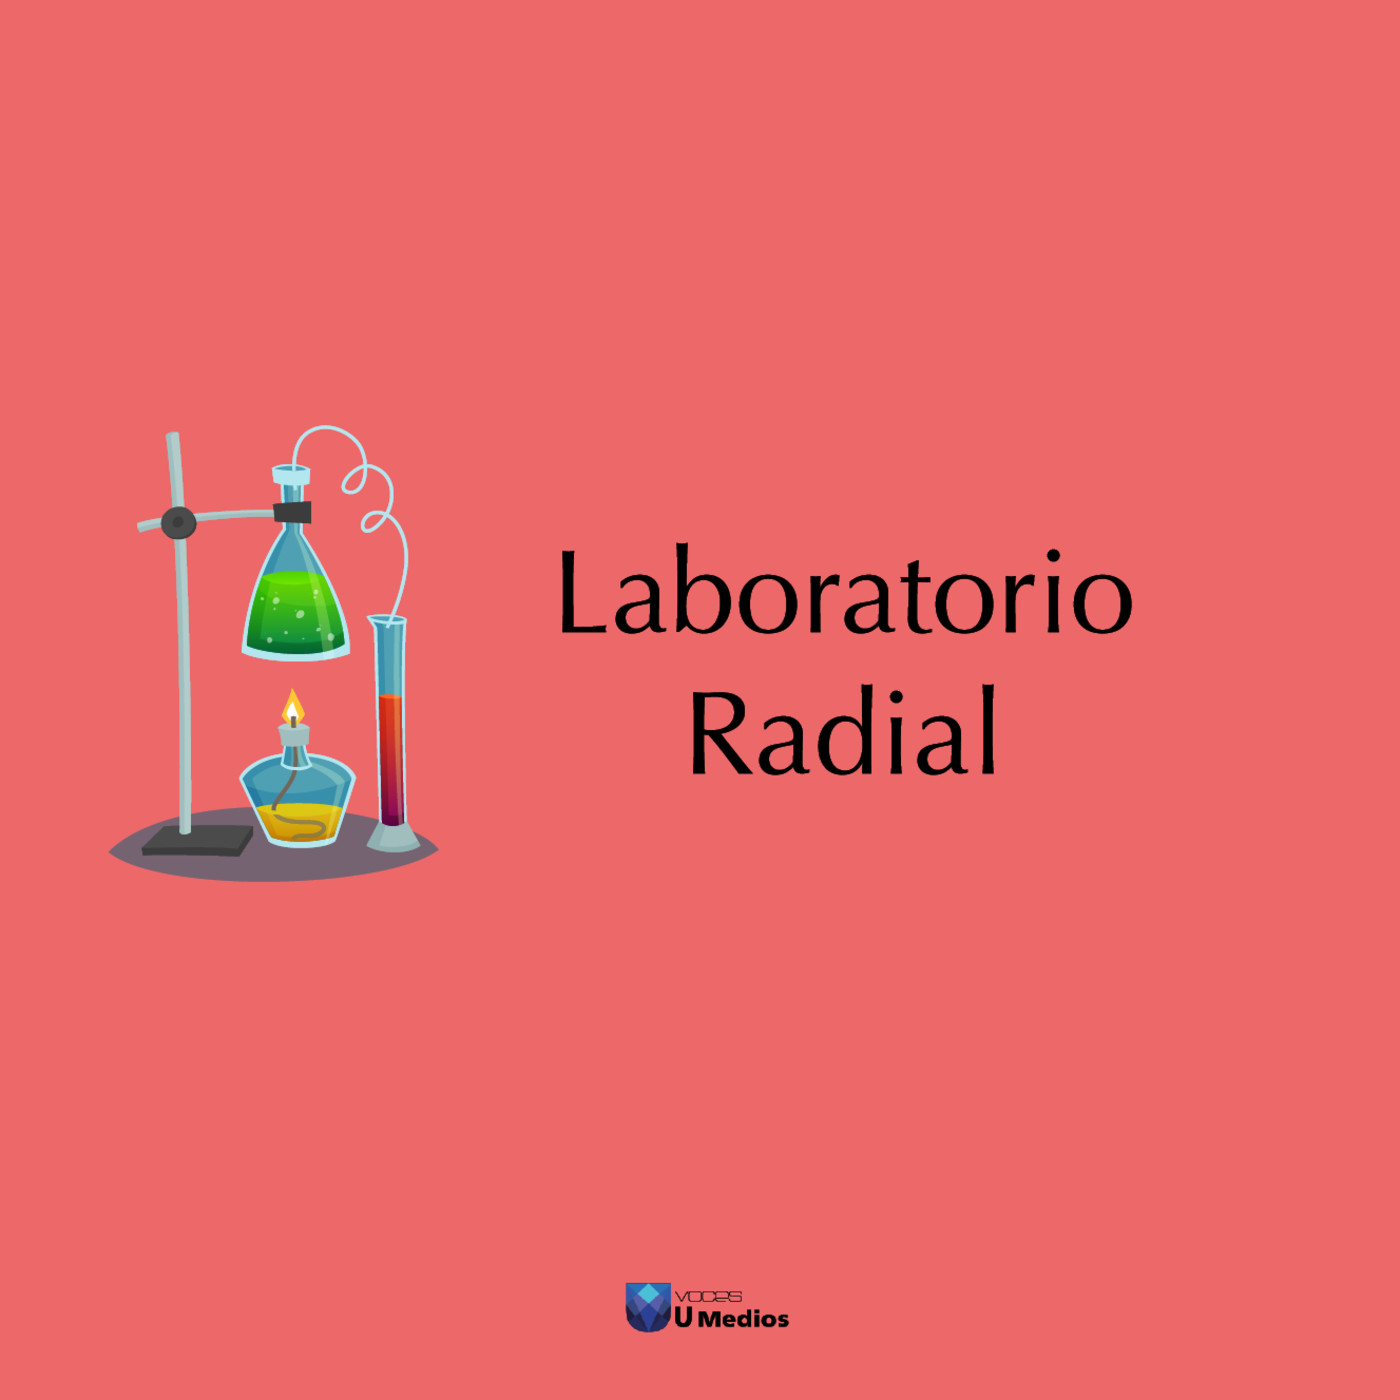 Tips Radiales de Laboratorio Radial